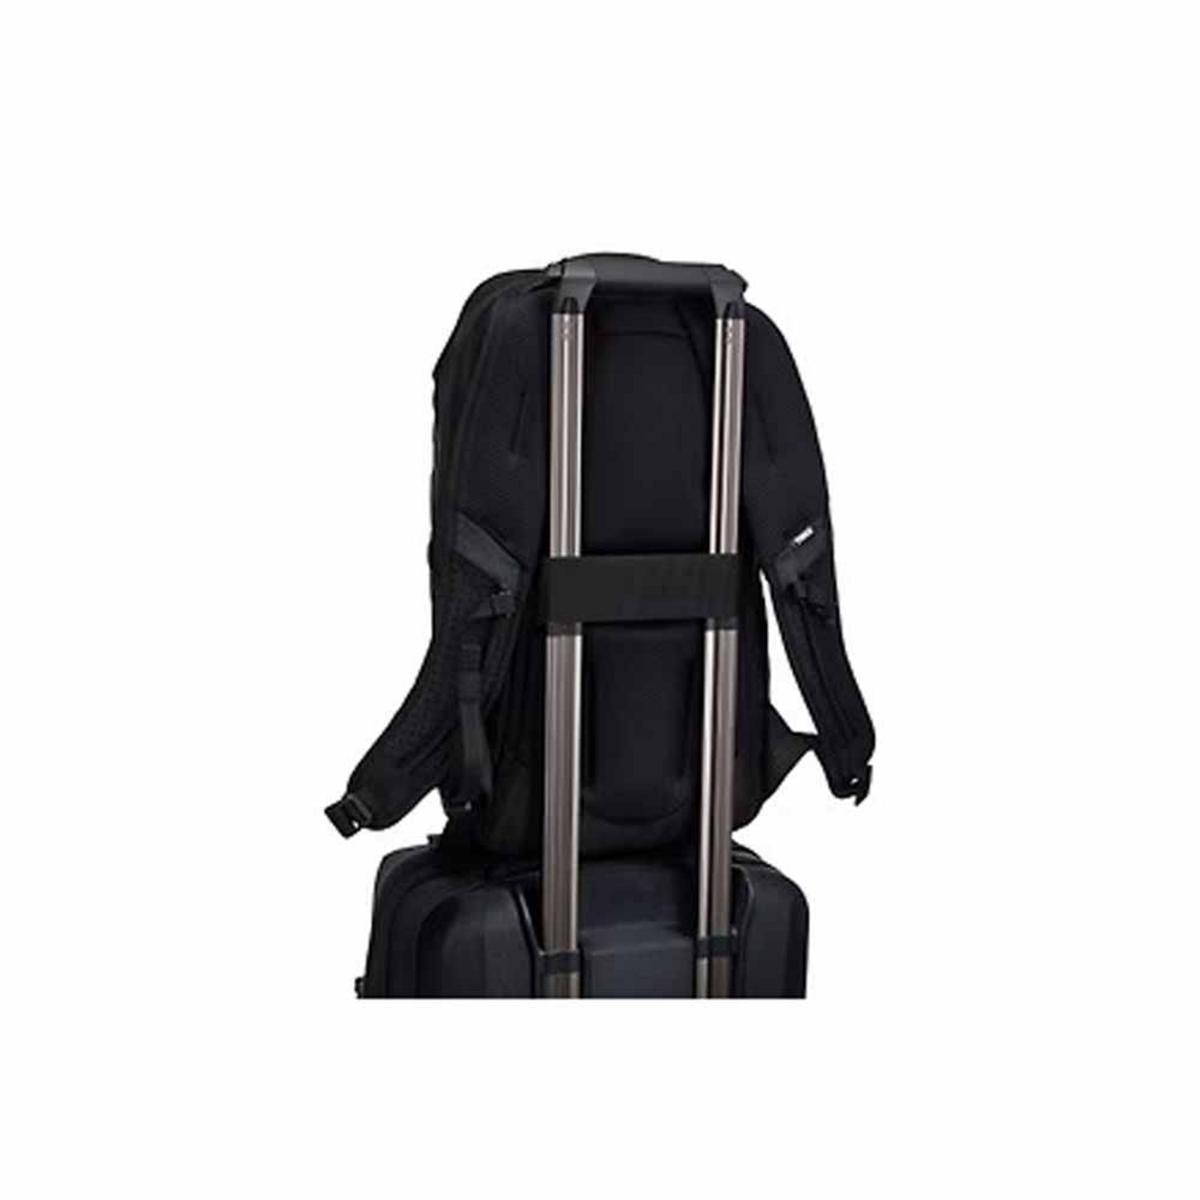 Thule Accent 20L Laptop Backpack - Black